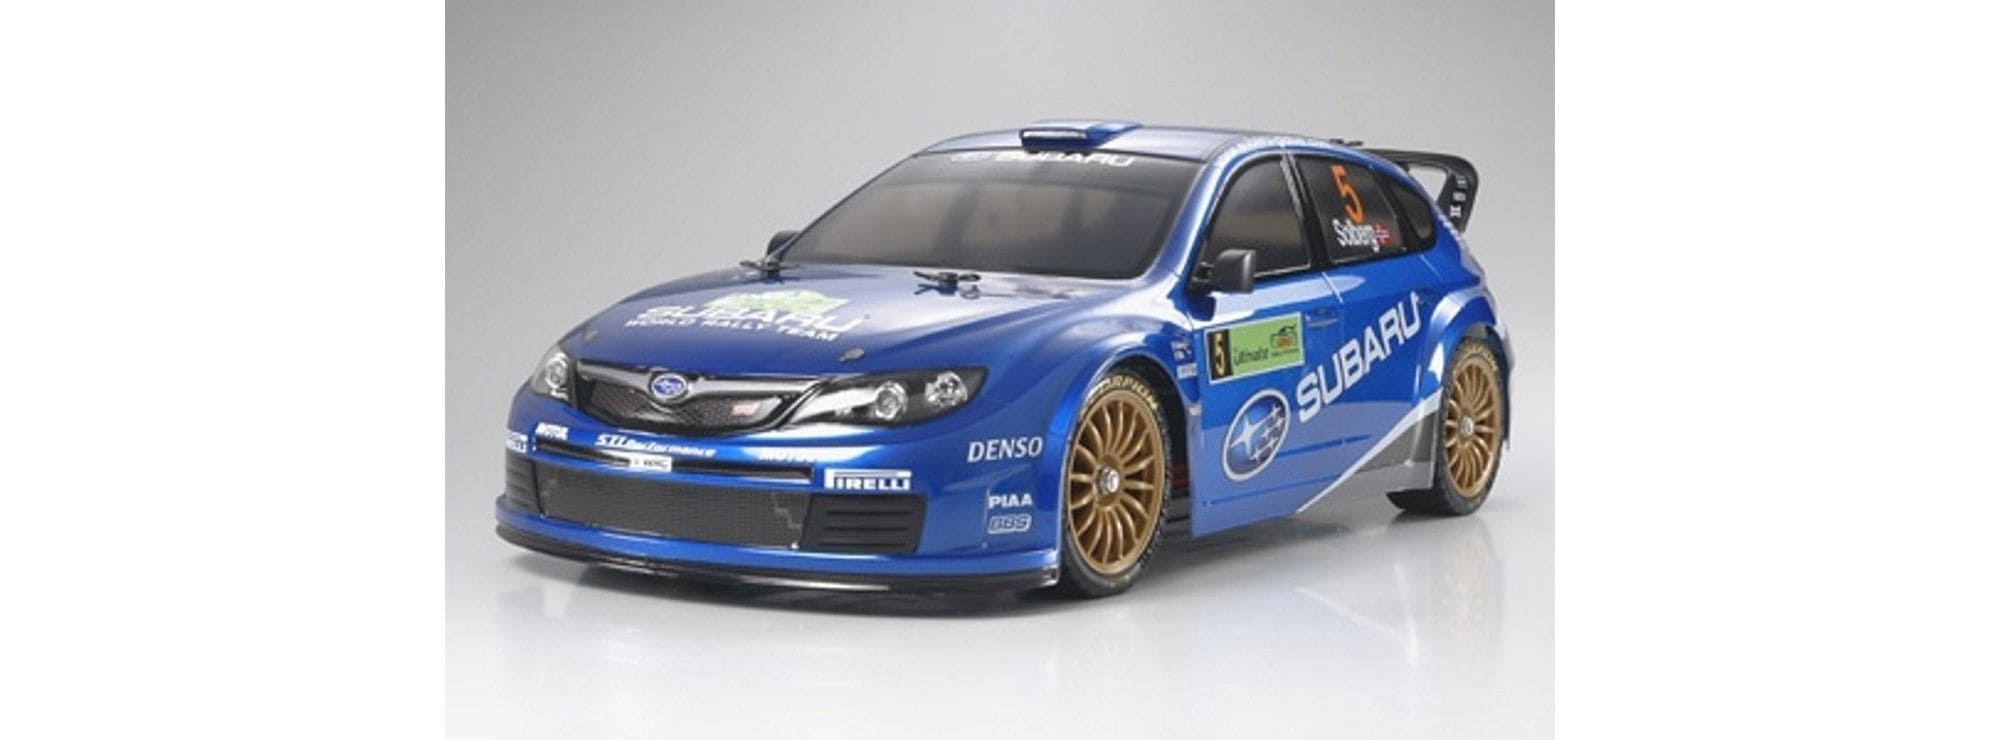 Tamiya Karosserie Satz Subaru Impreza WRC 2008 1:10